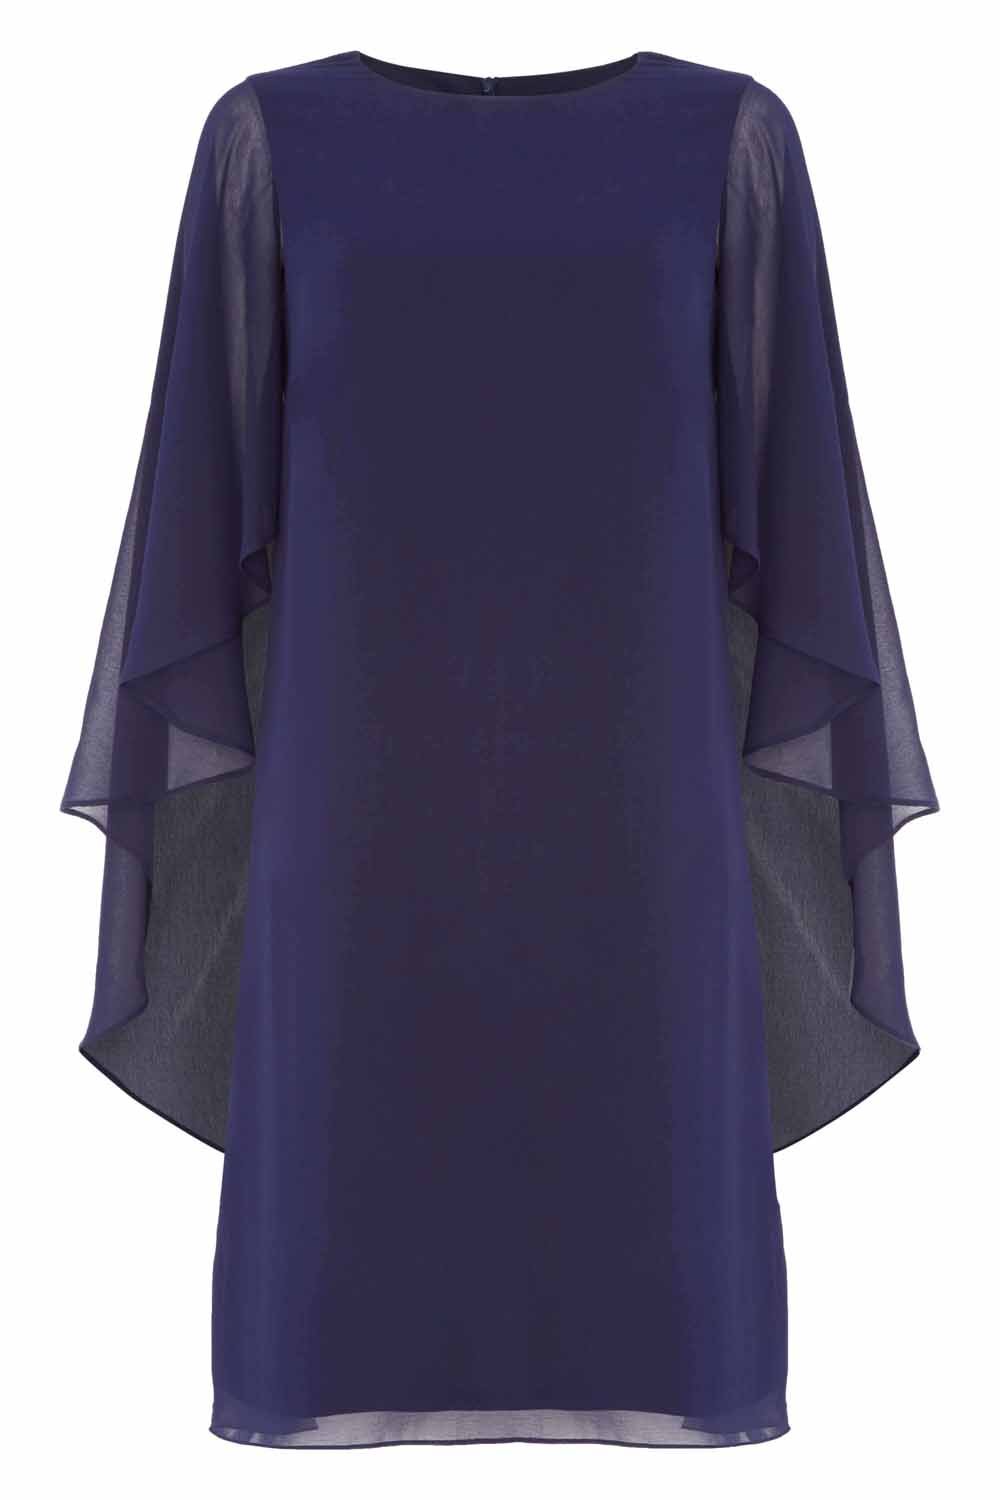 Midnight Blue Chiffon Cape Sleeve Dress, Image 5 of 5